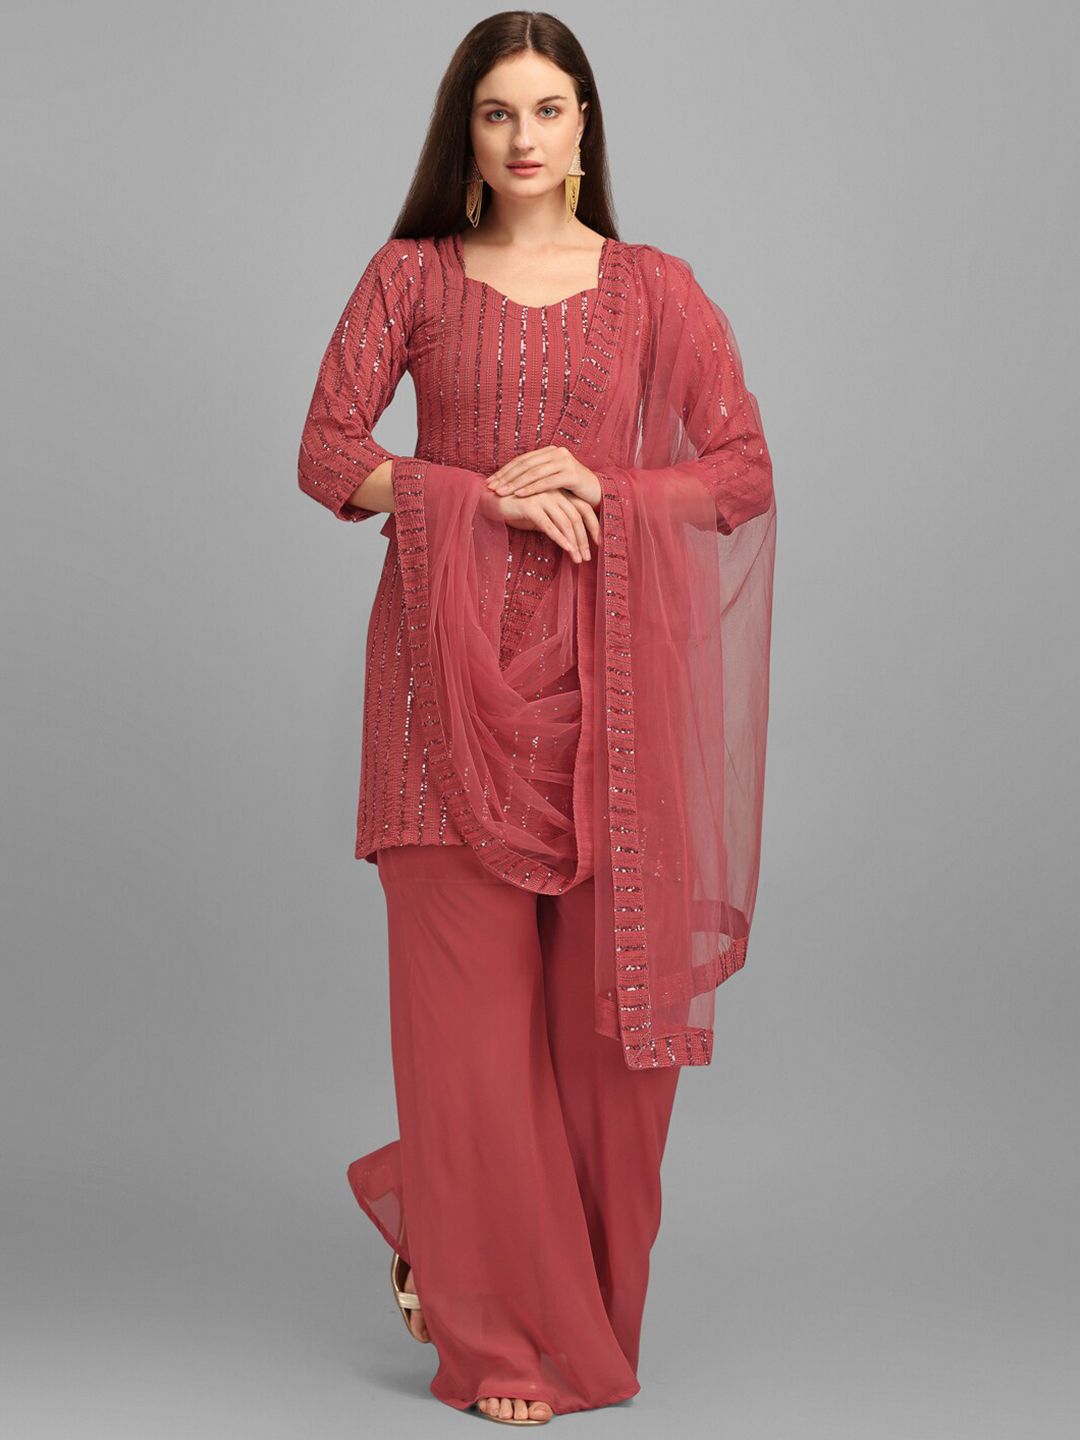 JATRIQQ Rust Embellished Semi-Stitched Dress Material Price in India